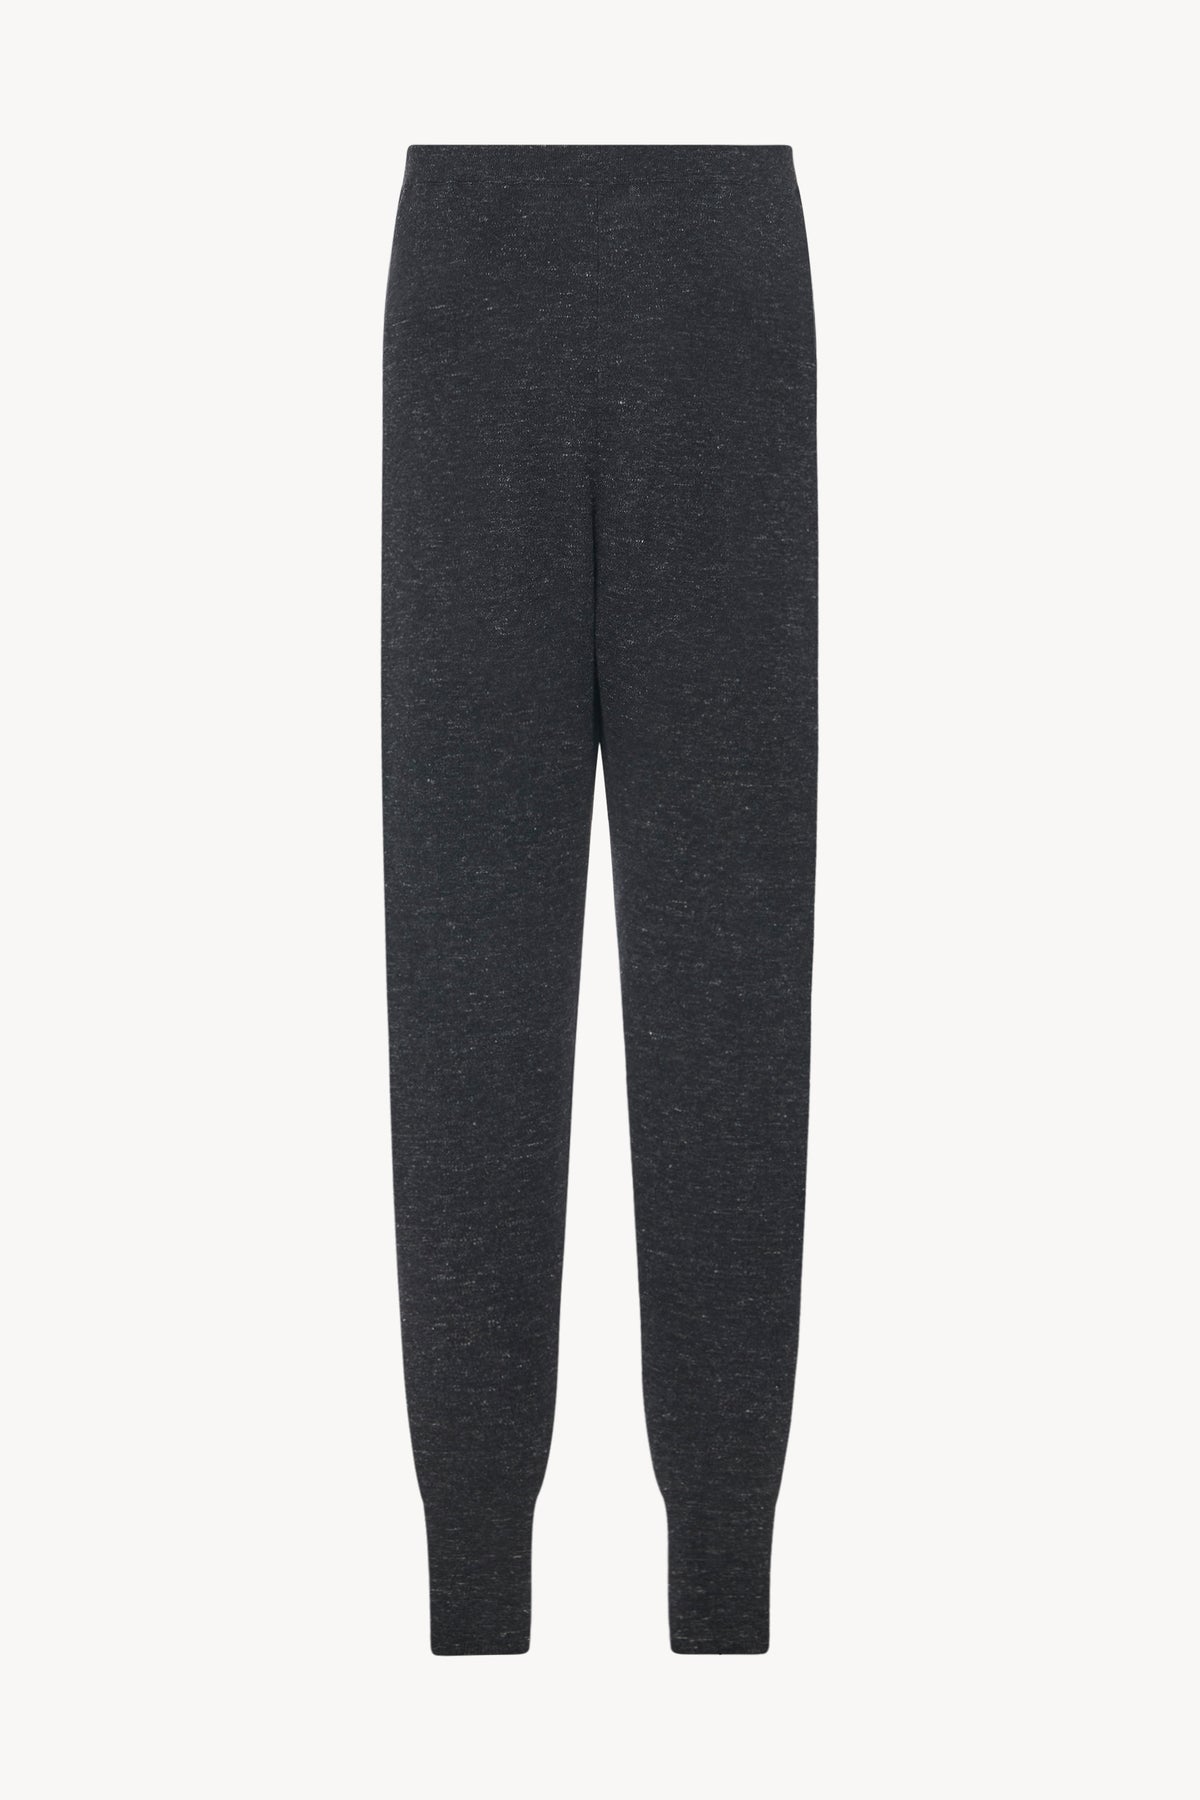 Devarona Pants Grey in Cashmere, Silk and Hemp – The Row